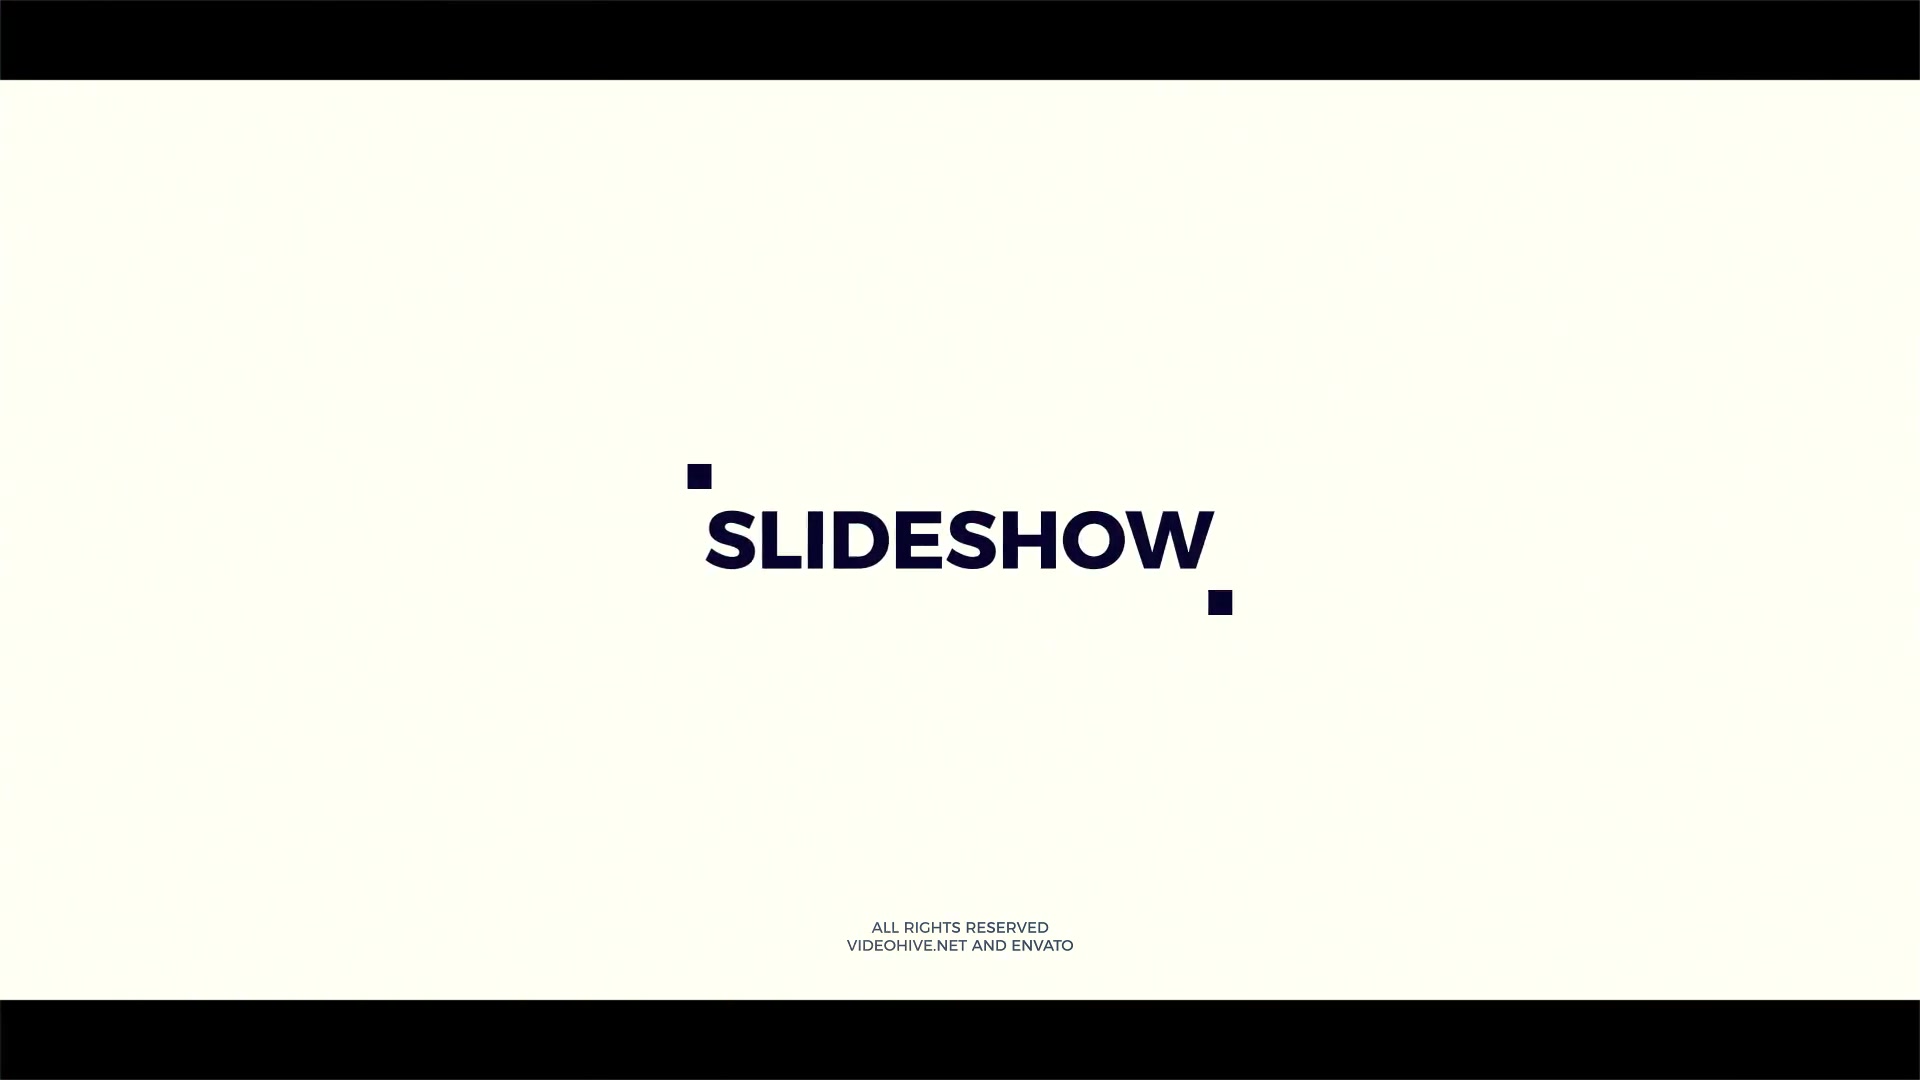 Modern Urban Slideshow - Download Videohive 20067277